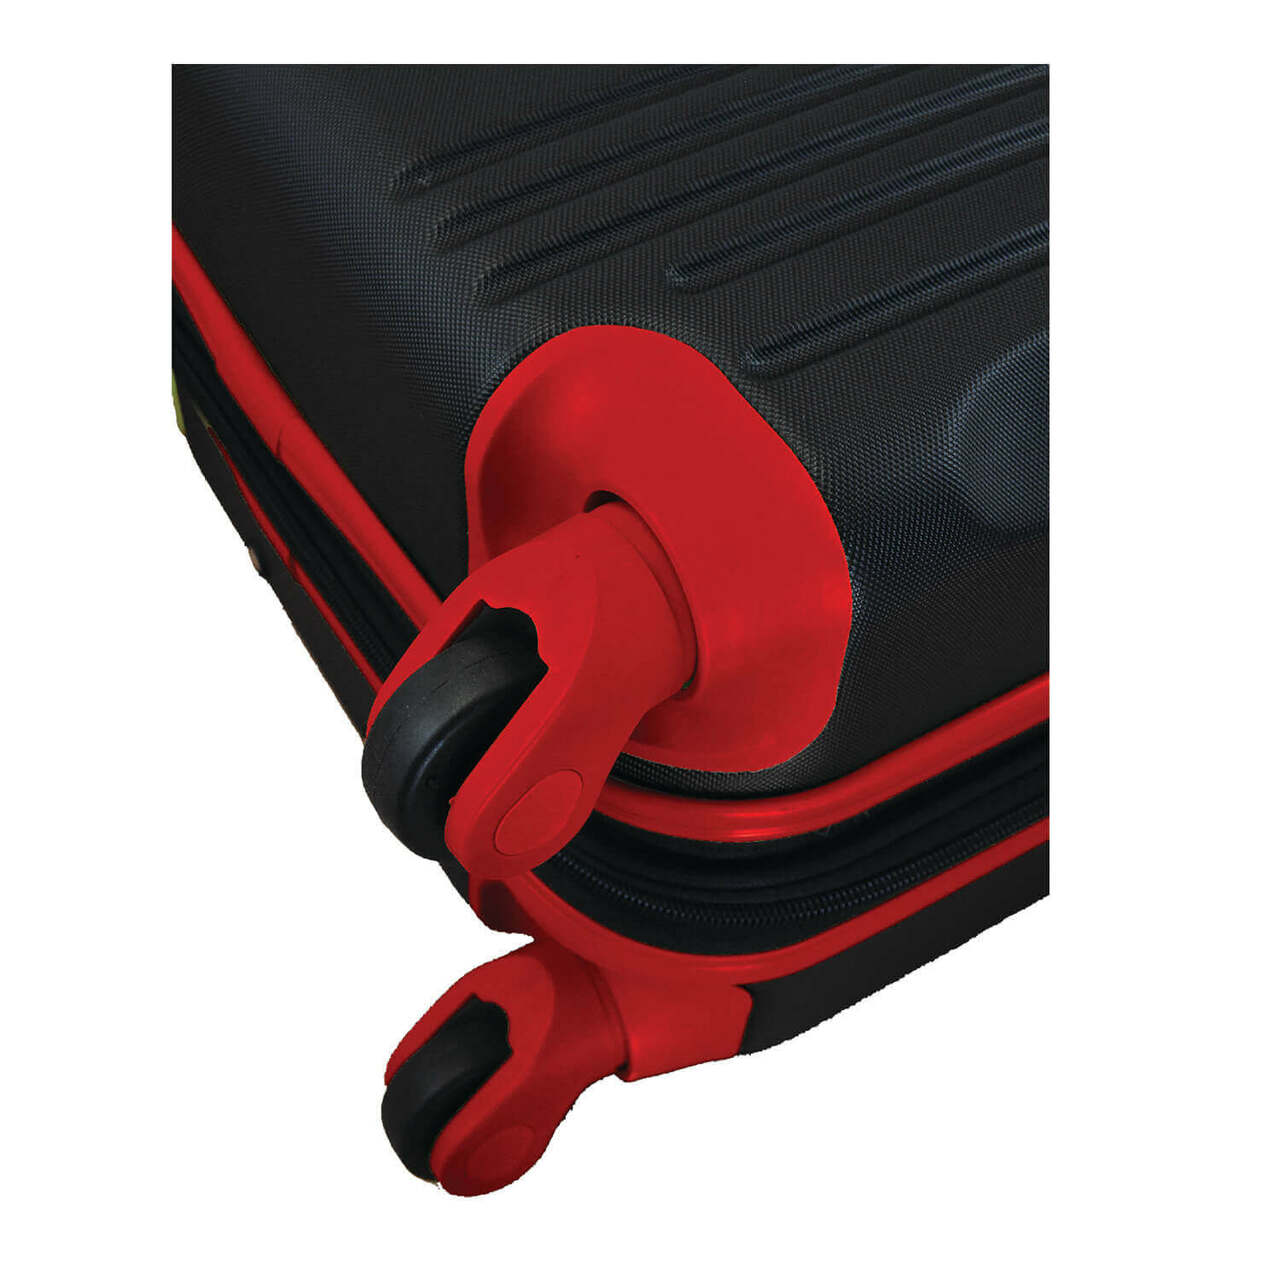 Houston Carry On Spinner Luggage | Houston Hardcase Two-Tone Luggage Carry-on Spinner in Red